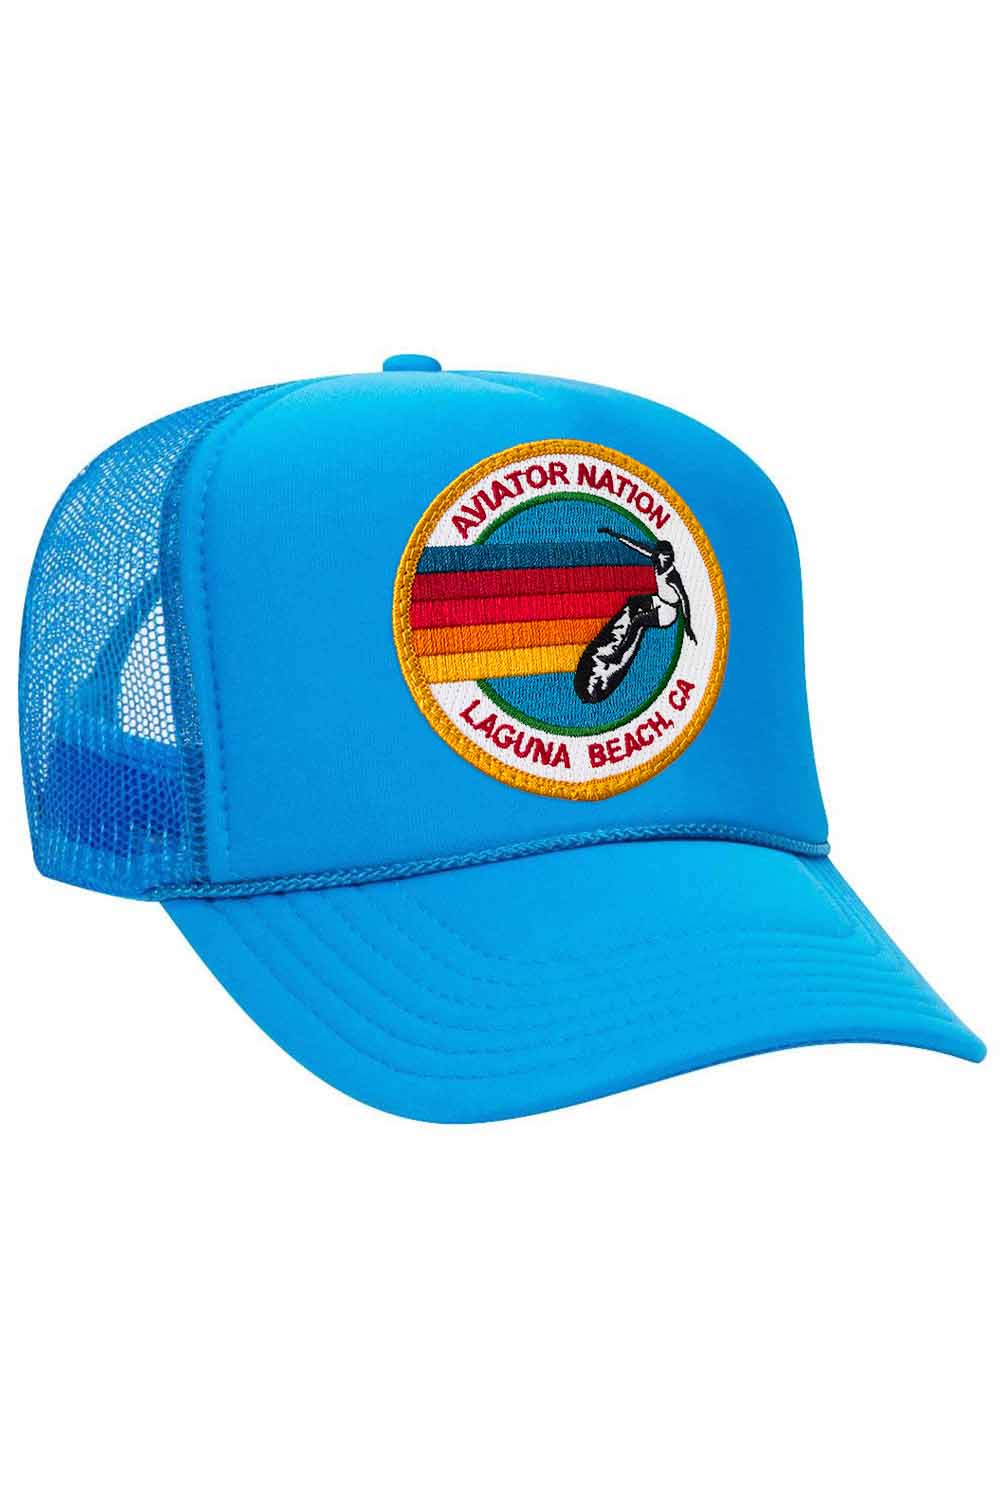 AVIATOR NATION LAGUNA BEACH TRUCKER HAT HATS Aviator Nation OS NEON BLUE 